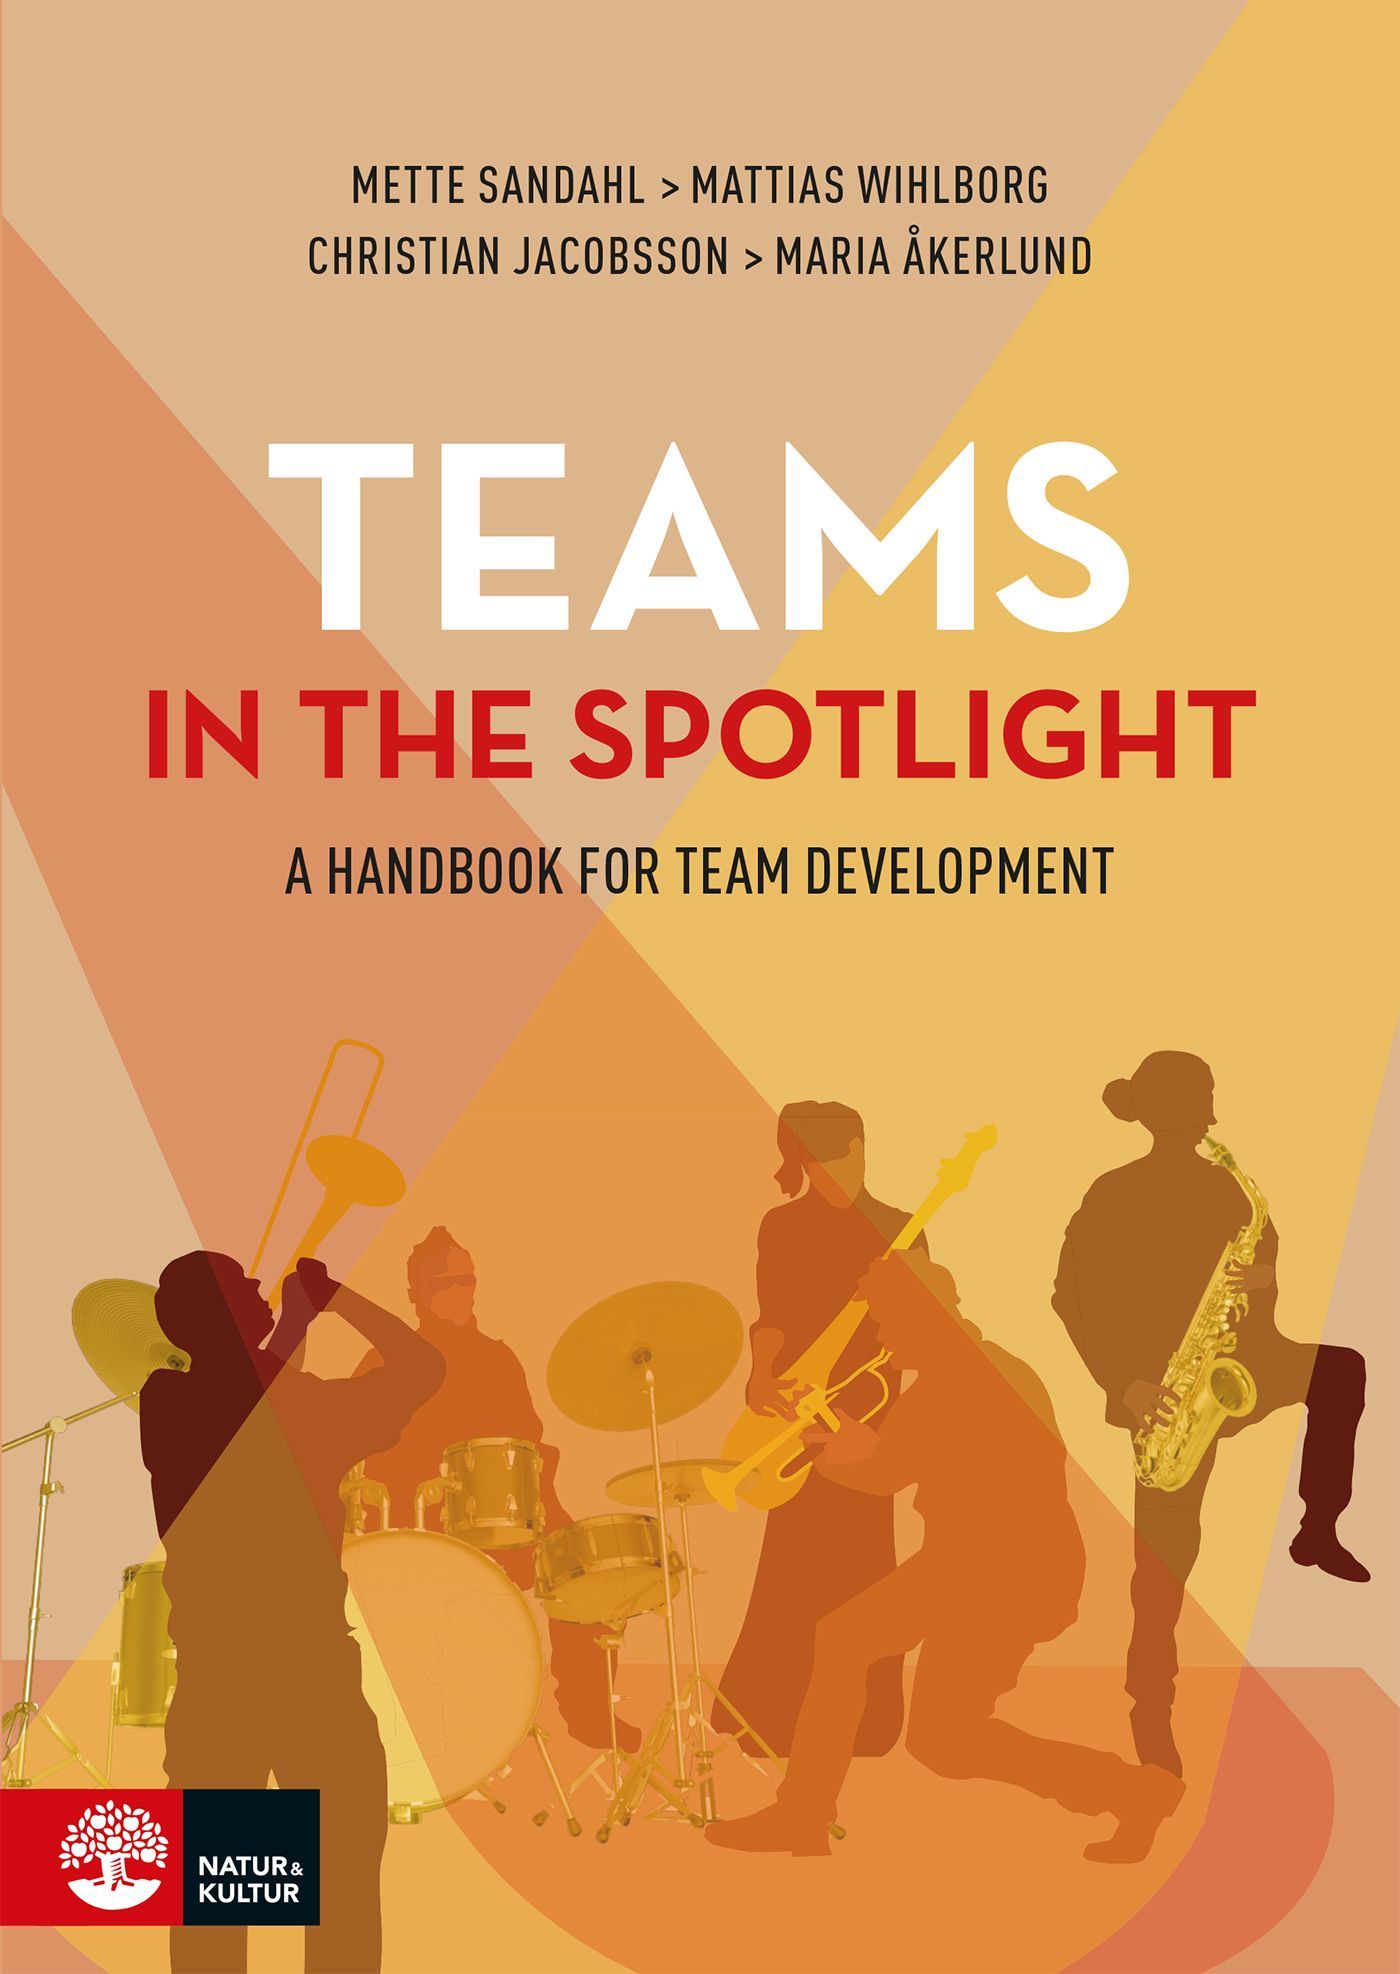 Teams in the spotlight : A handbook for team development, eBook by Christian Jacobsson, Mette Sandahl, Mattias Wihlborg, Maria Åkerlund